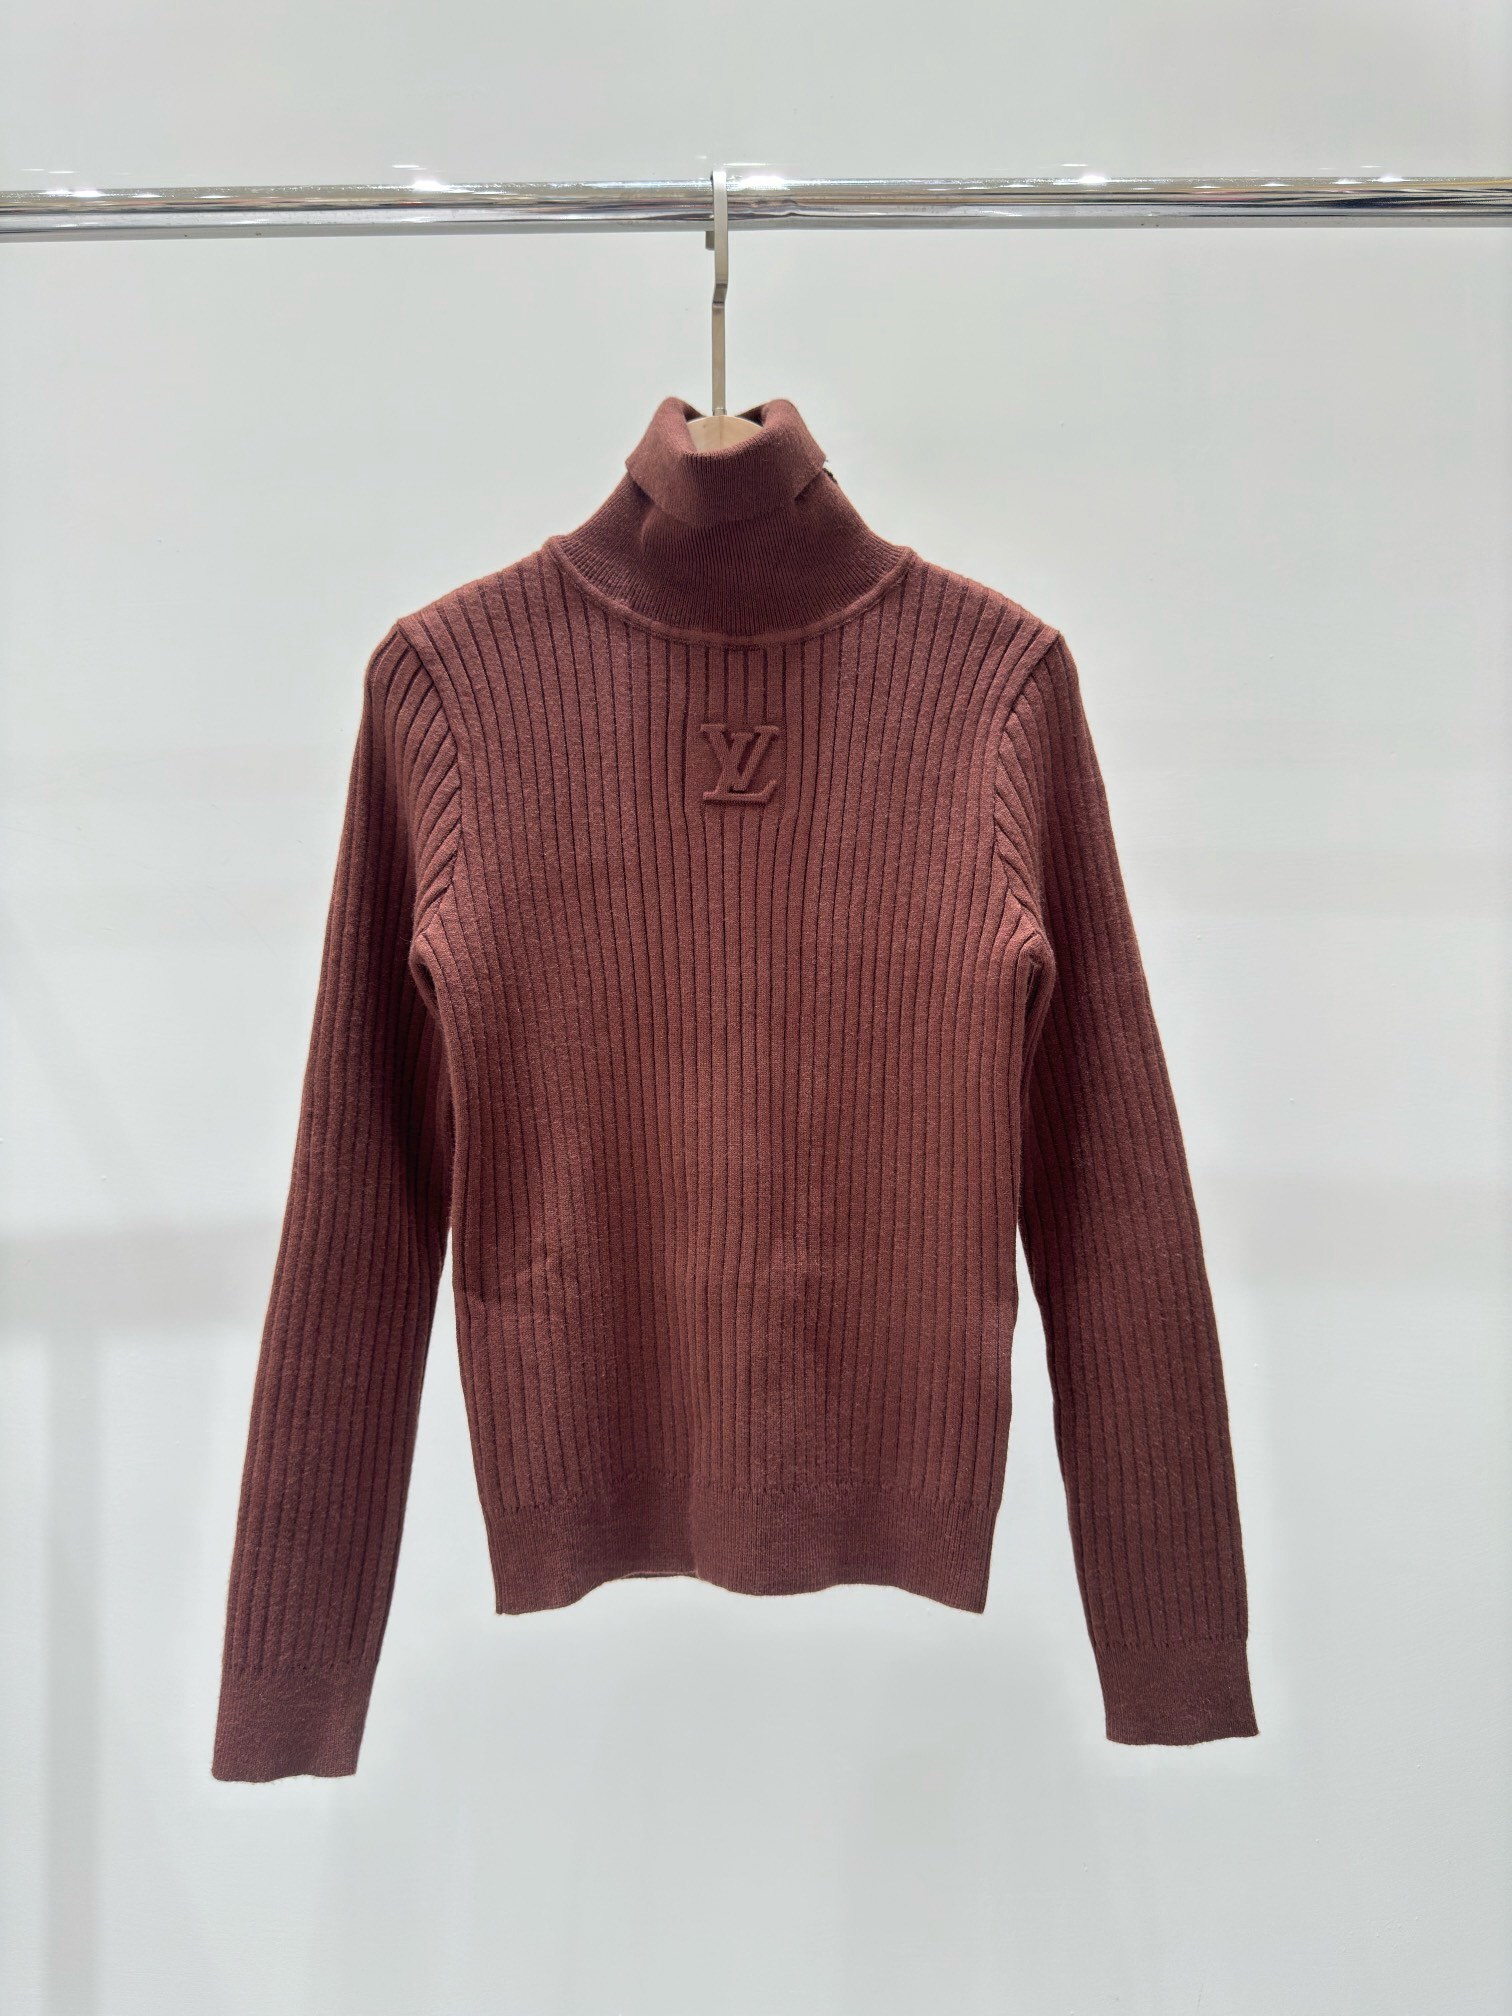 Louis Vuitton Clothing Knit Sweater Sweatshirts Black Brick Red White Knitting Wool Fall/Winter Collection